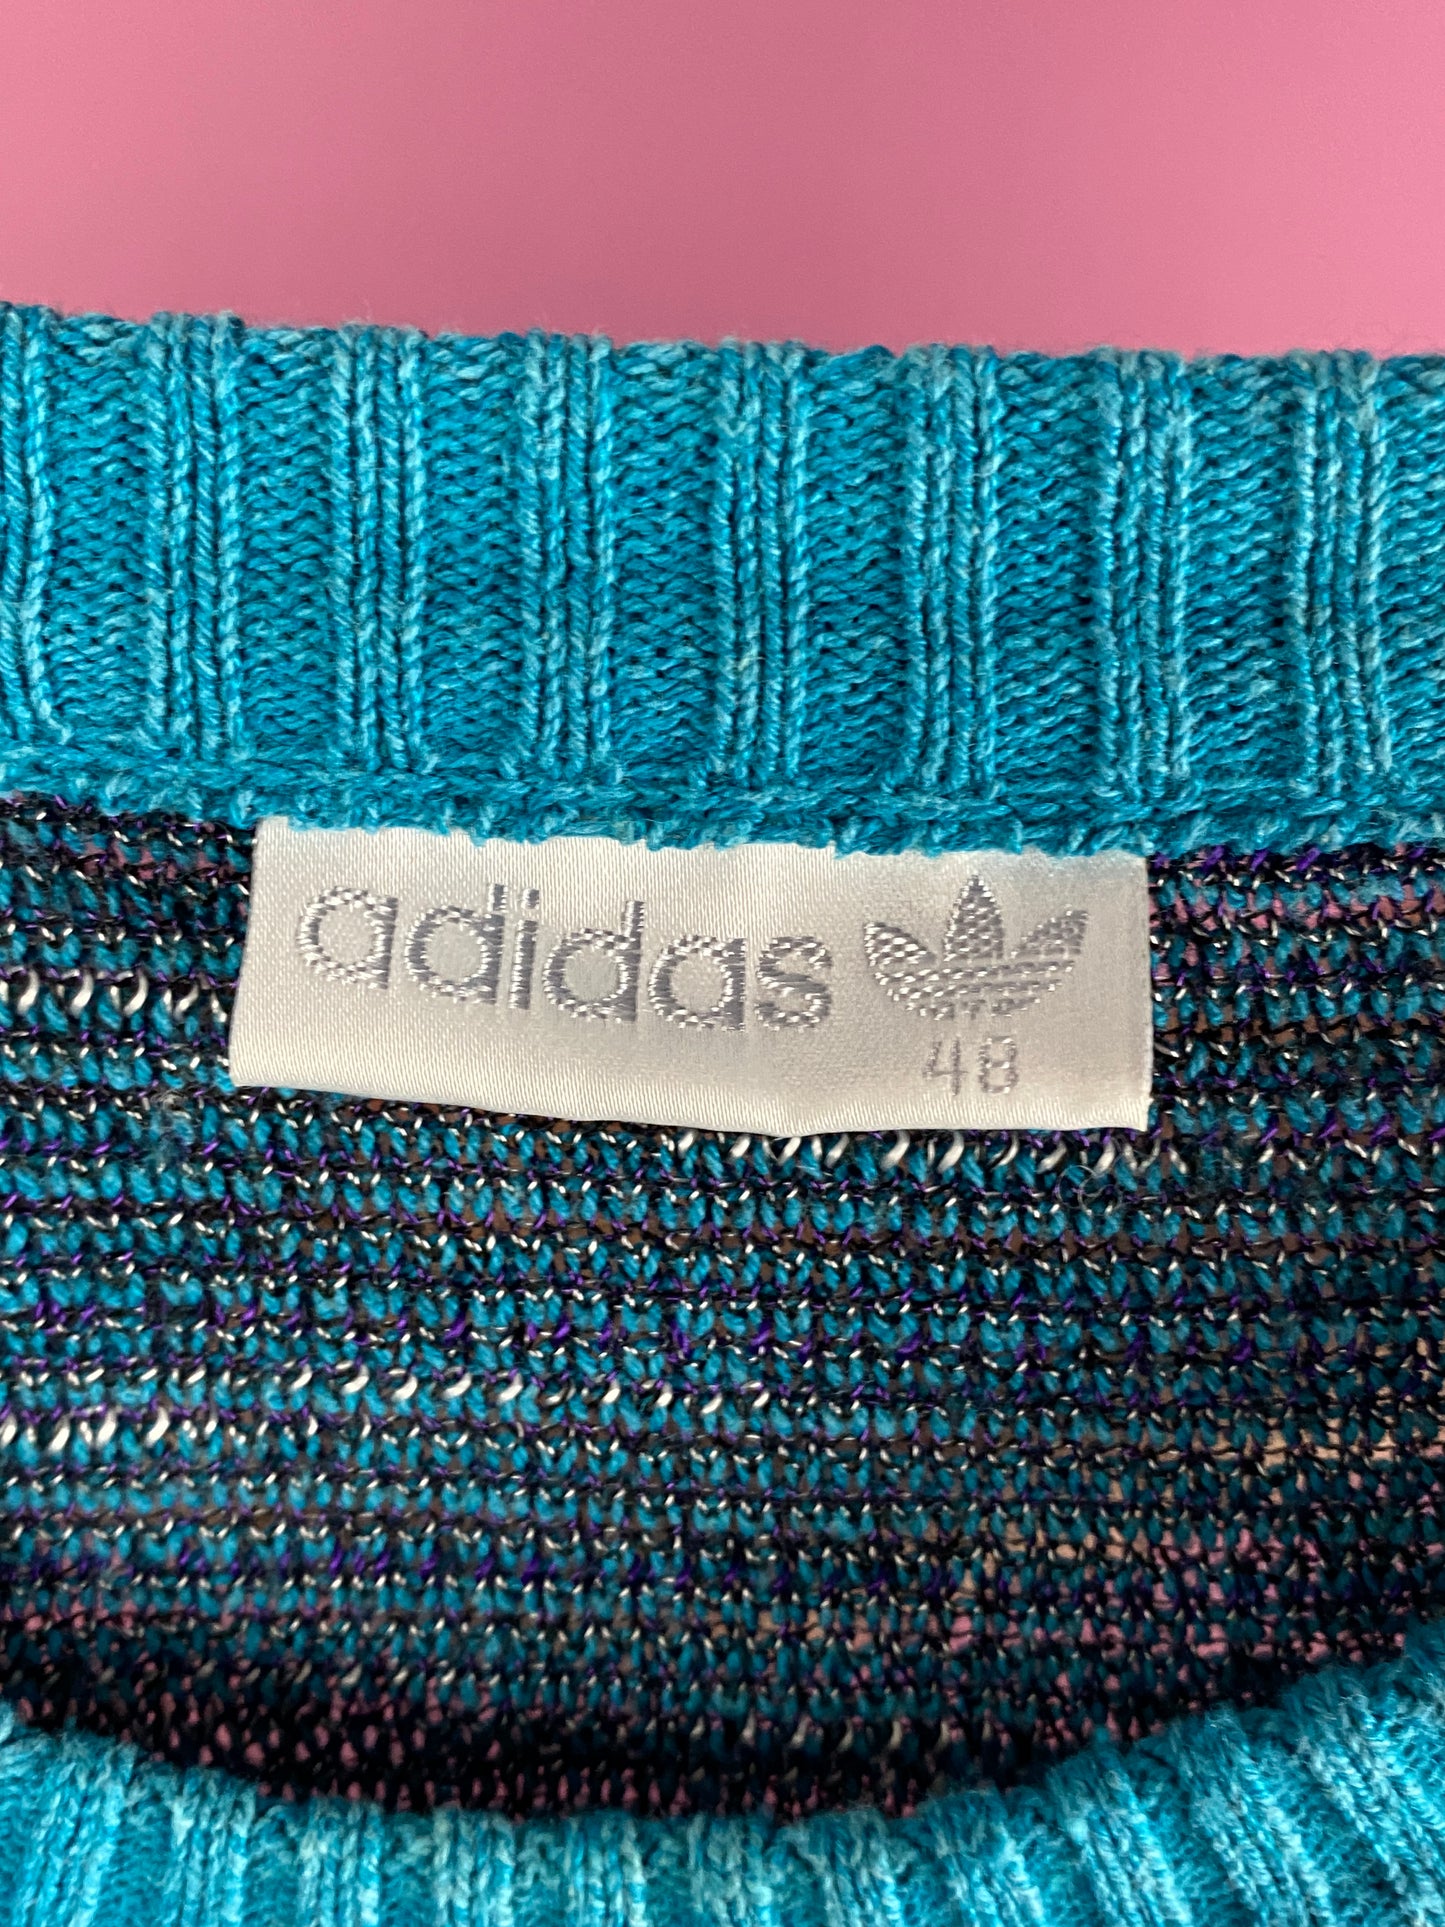 90s Adidas Vintage Men's Knit Sweater - M Blue Acrylic